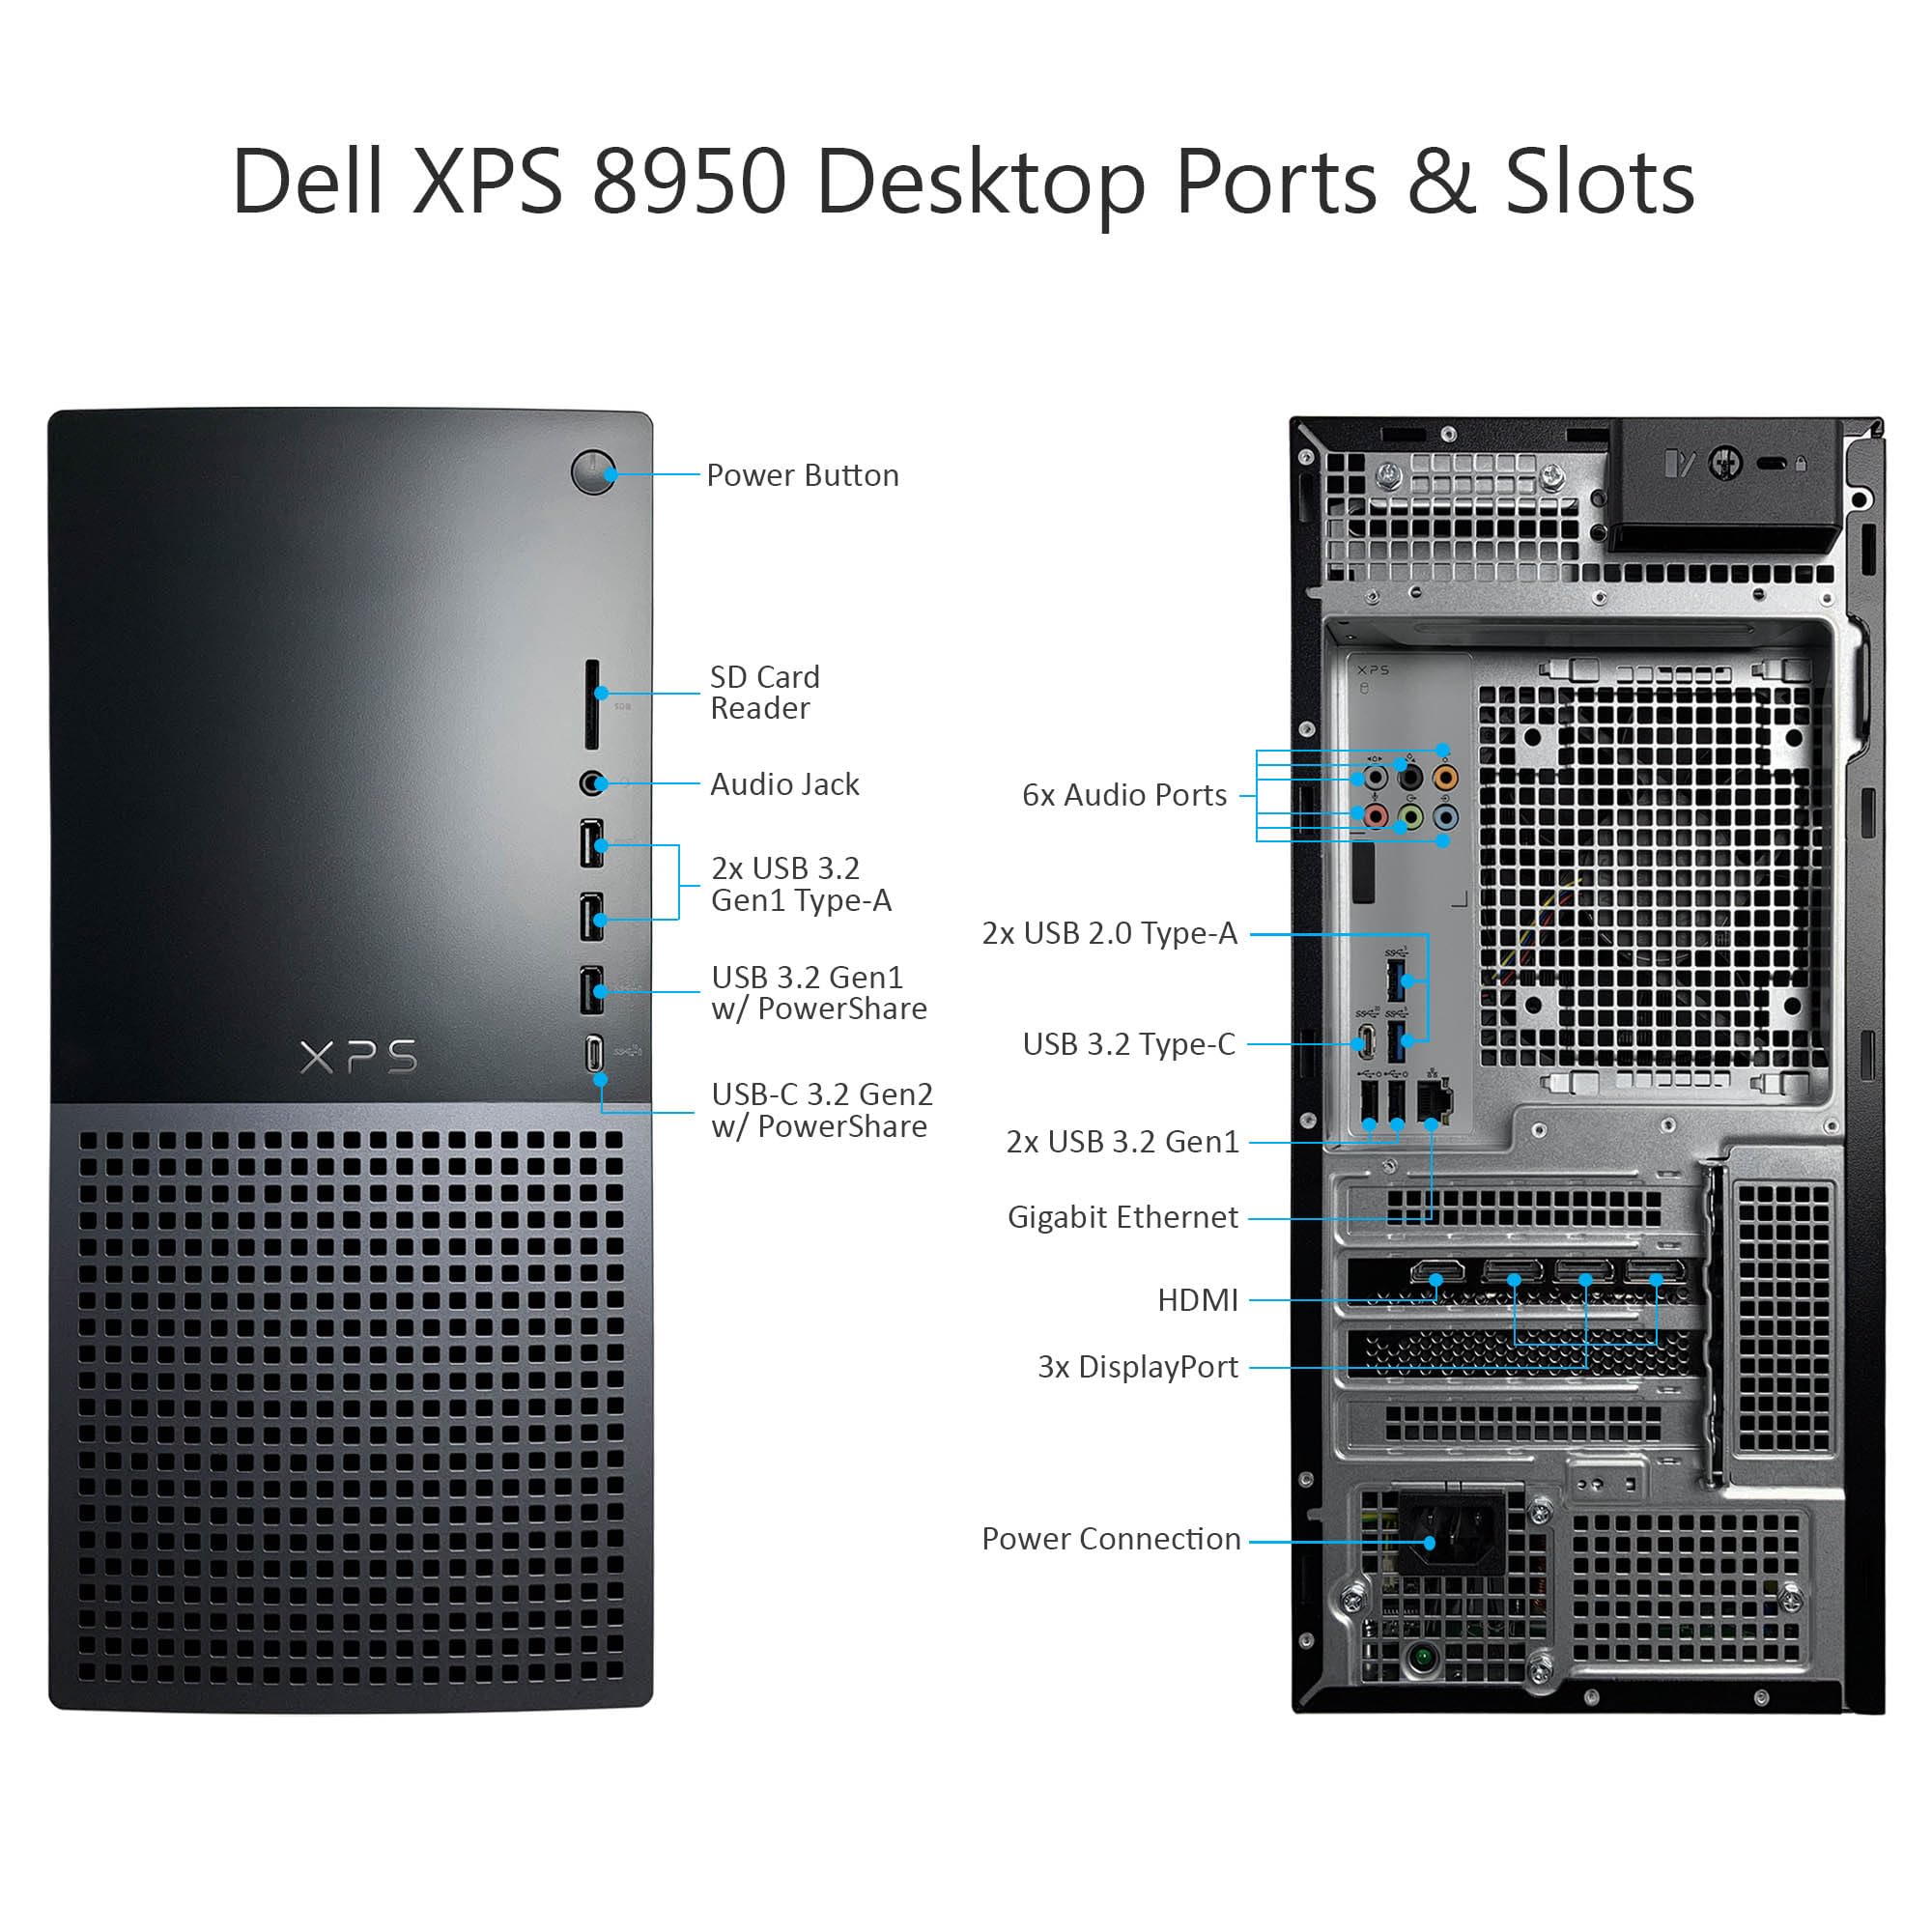 Dell XPS 8950 Gaming Desktop Computer - 12th Gen Intel Core i9-12900K up to 5.2 GHz CPU, 128GB DDR5 RAM, 8TB SSD + 12TB HDD, GeForce RTX 3090 24GB GDDR6, Killer Wi-Fi 6, Windows 11 Home